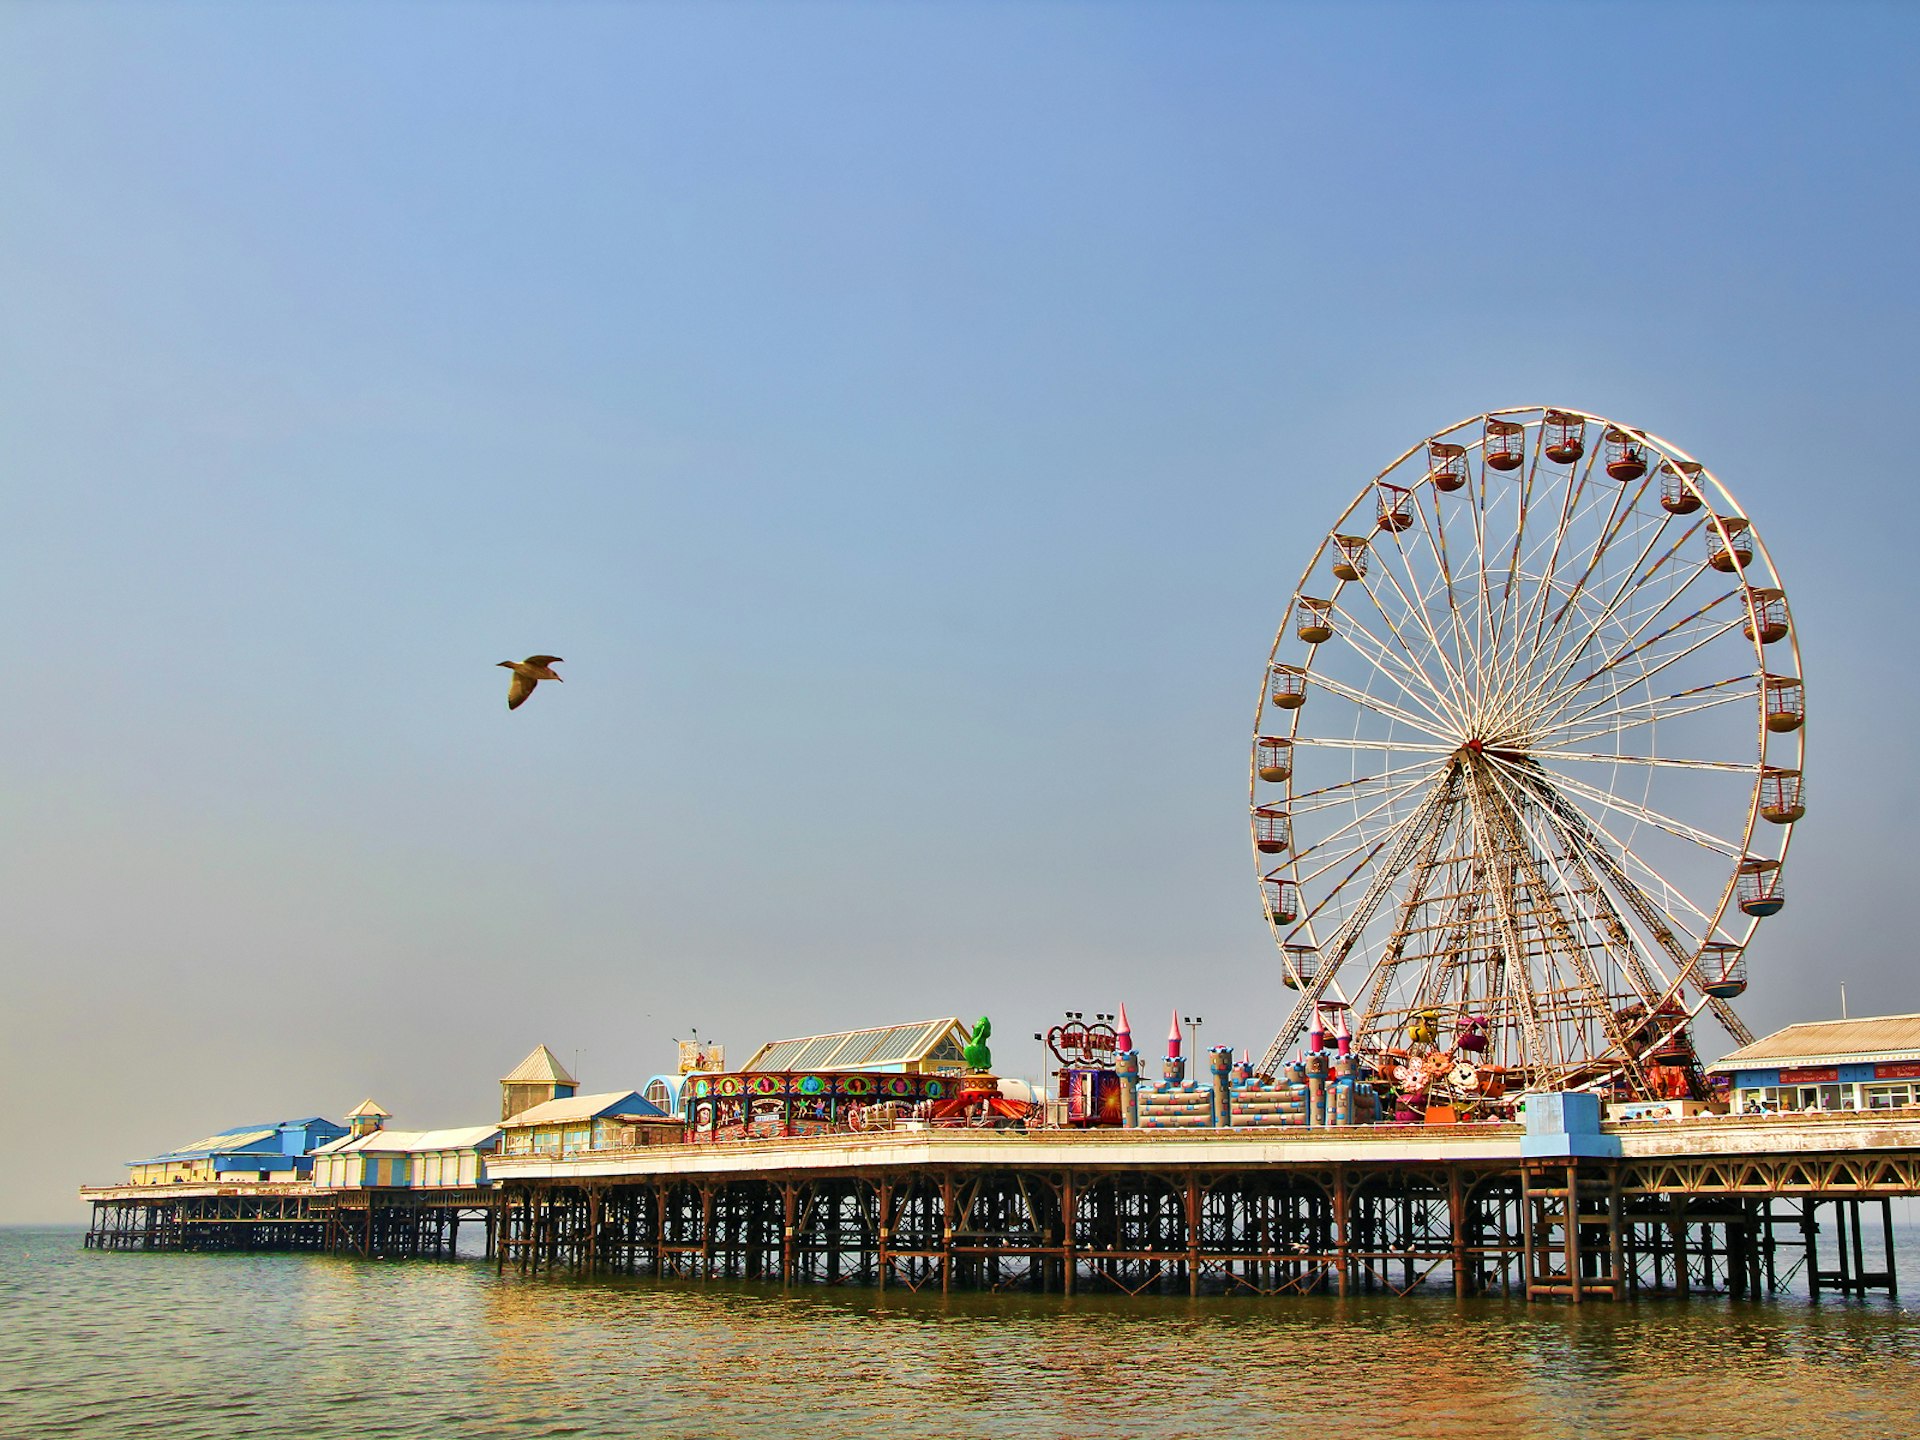 Disney alternatives - Blackpool Pleasure Beach pier. The huge ferris wheel sticks up into a clear blue sky as a seagull flies by. 